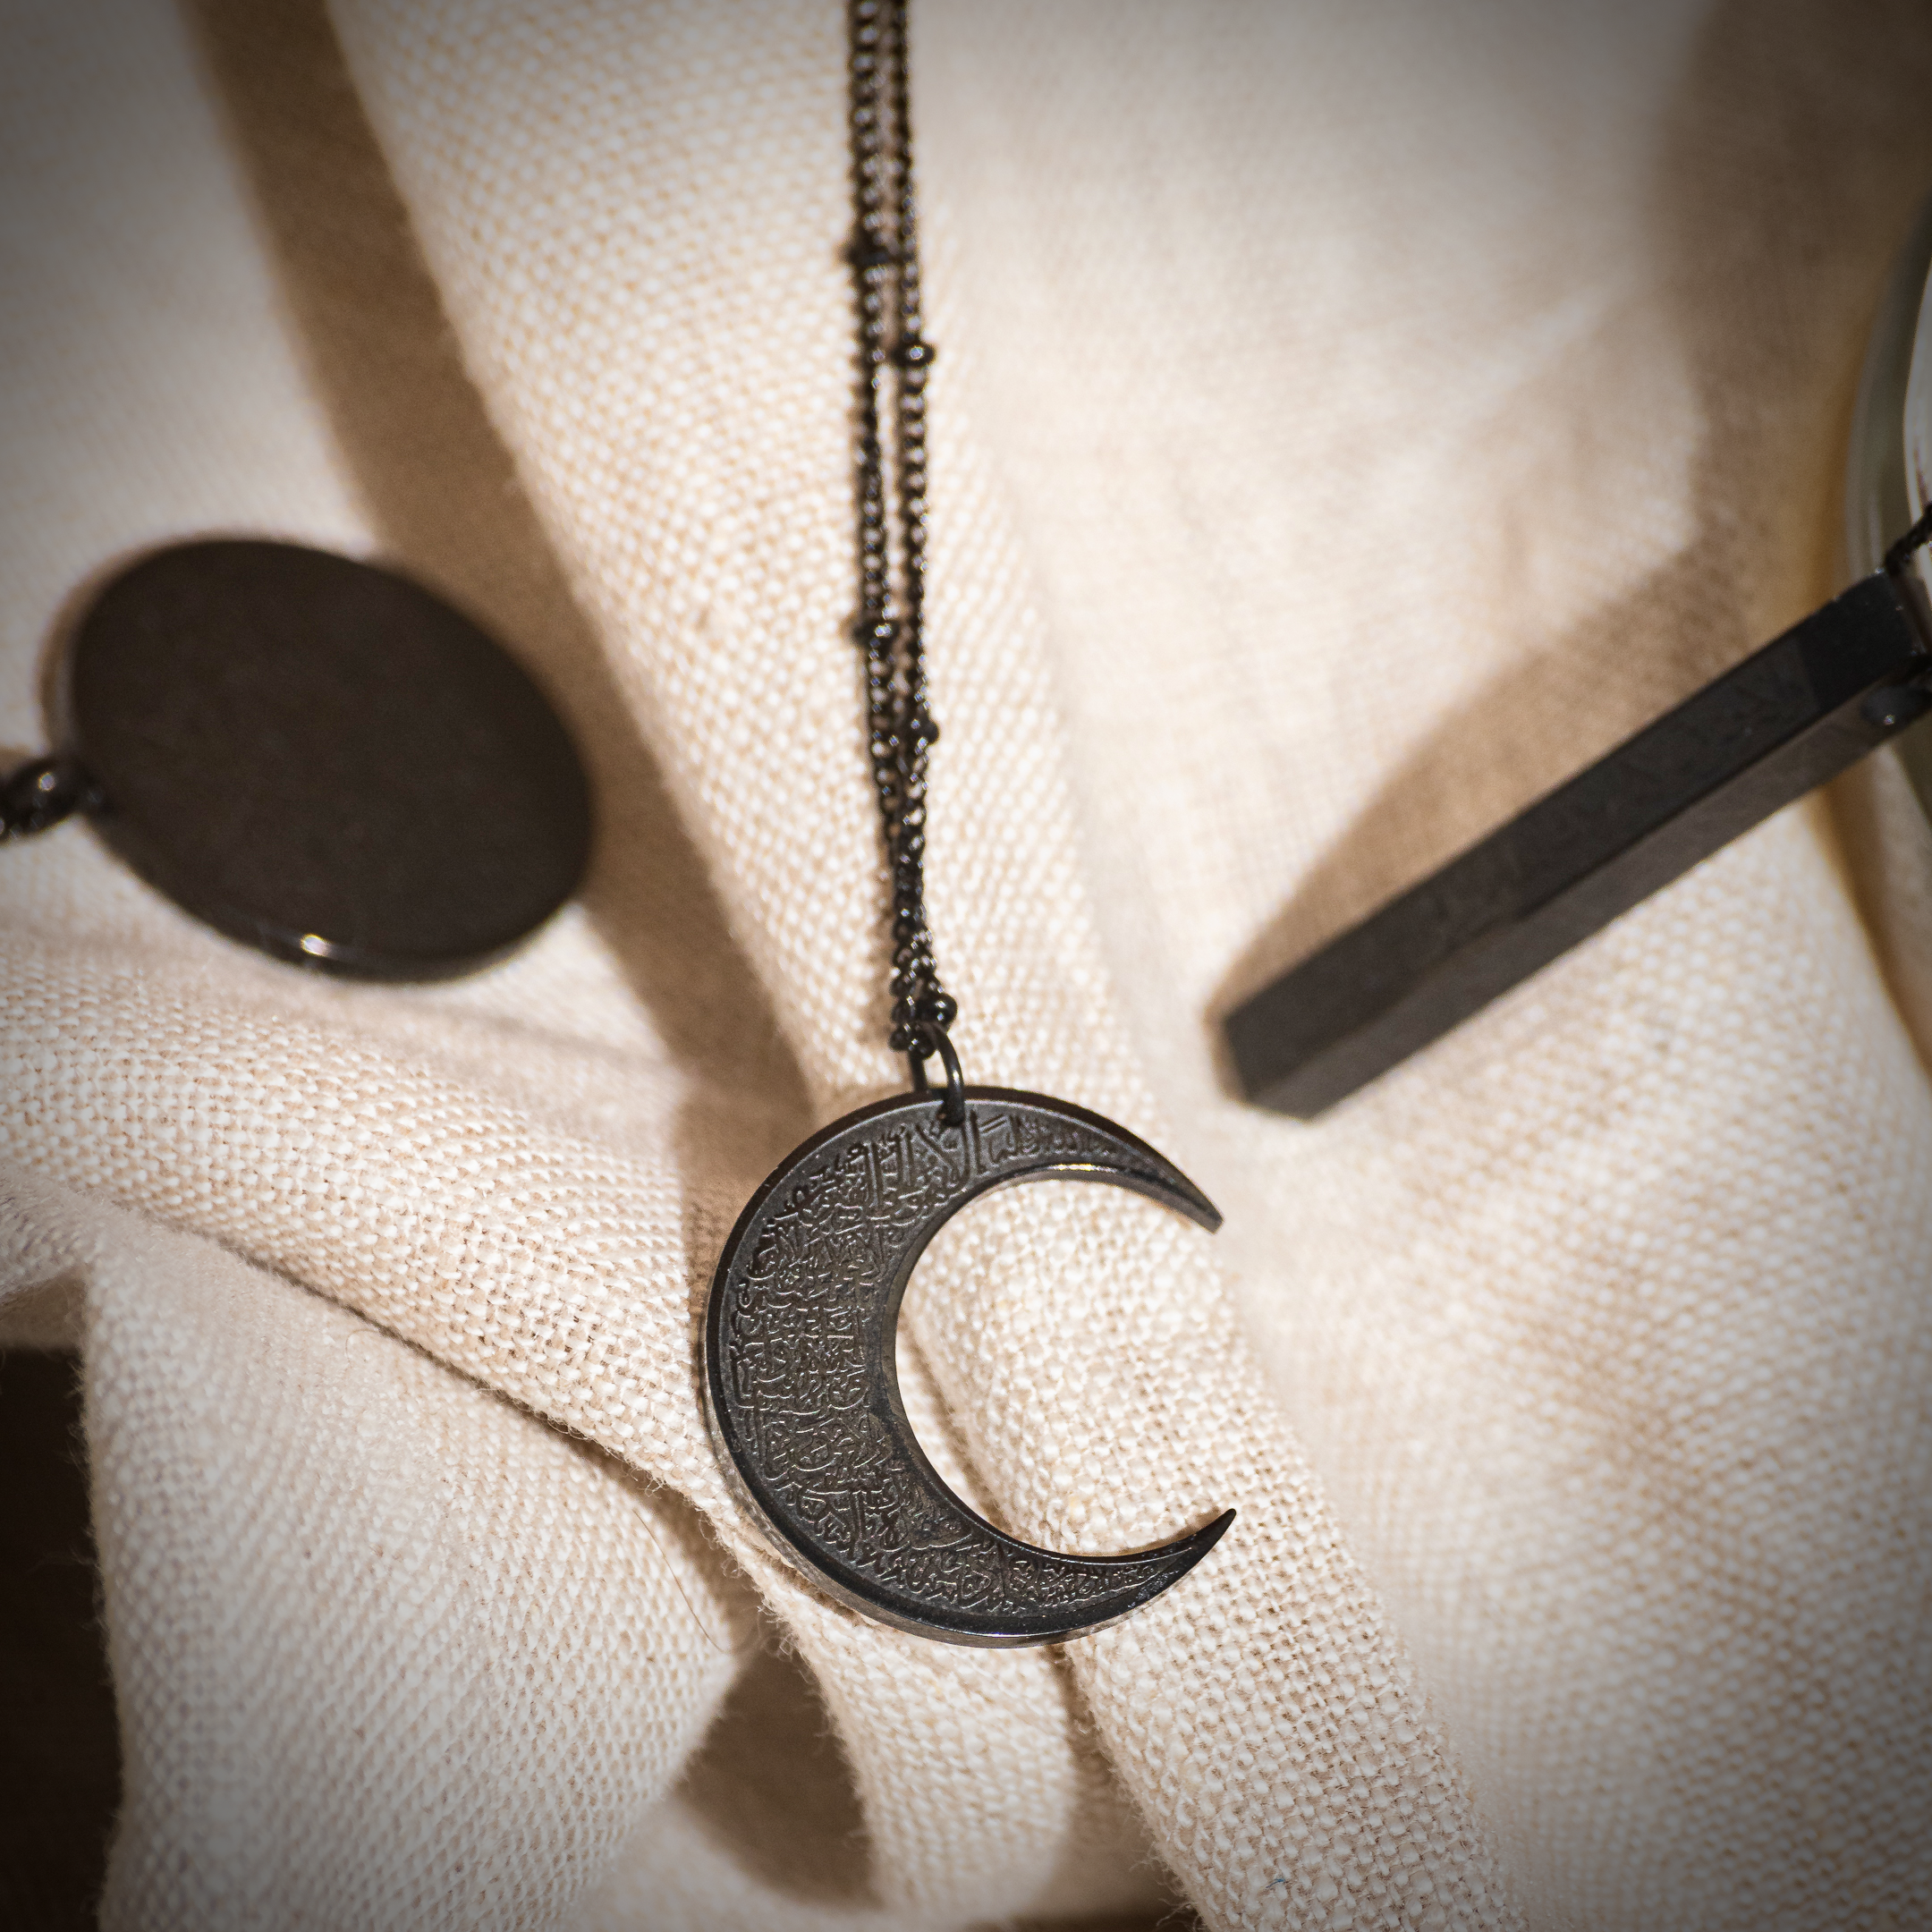 Black Ayat Ul Kursi Moon Pendant with Dot Chain